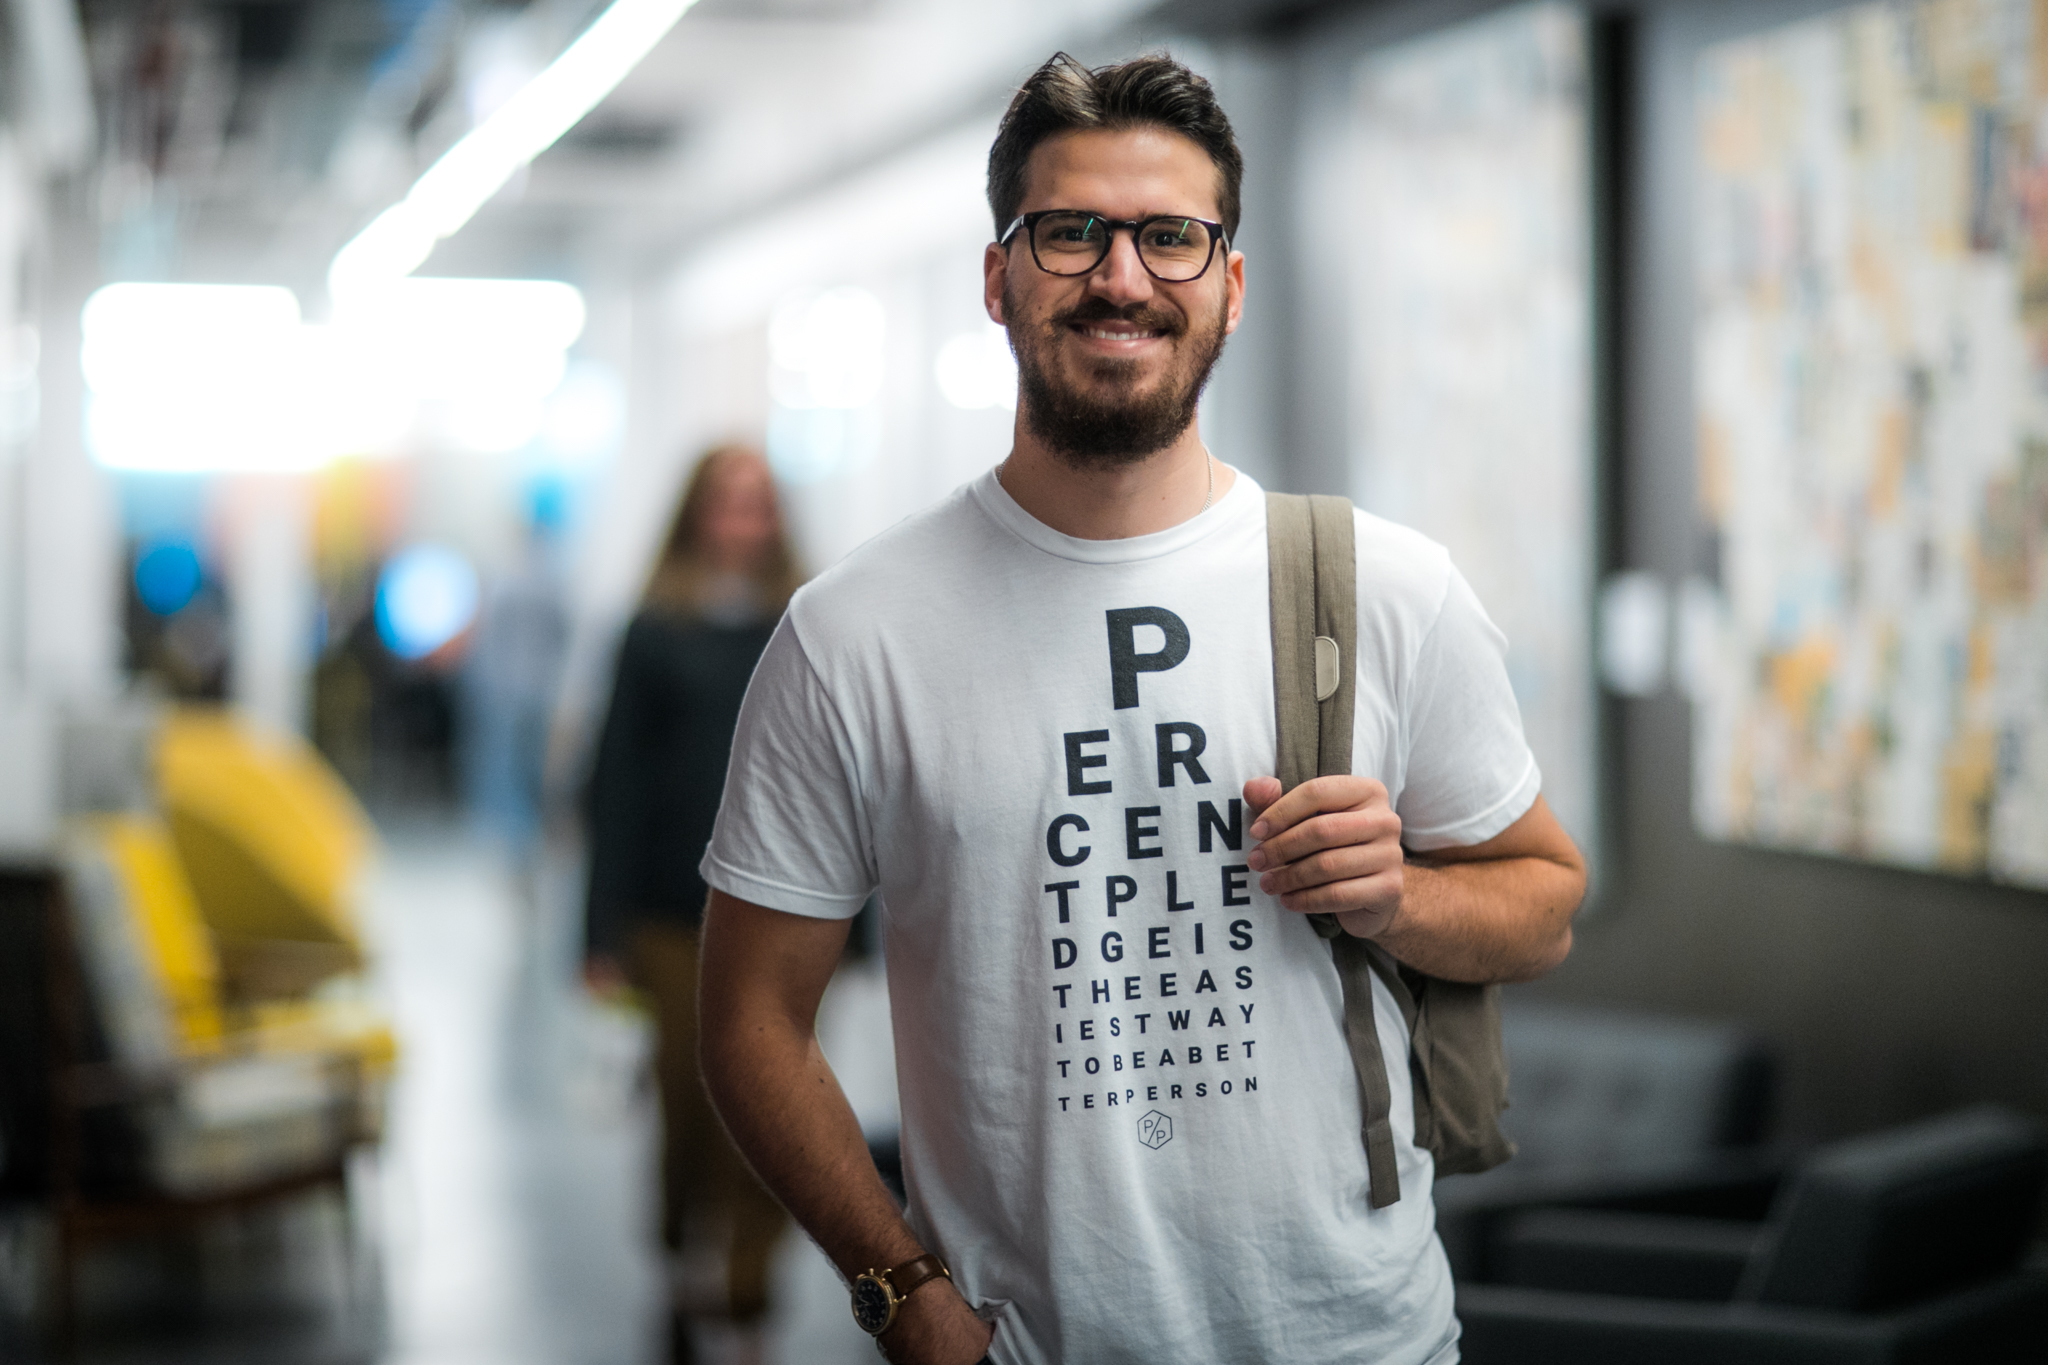 Percent Pledge founder Joel Pollick smiles at camera while wearing Percent Pledge logo t-shirt